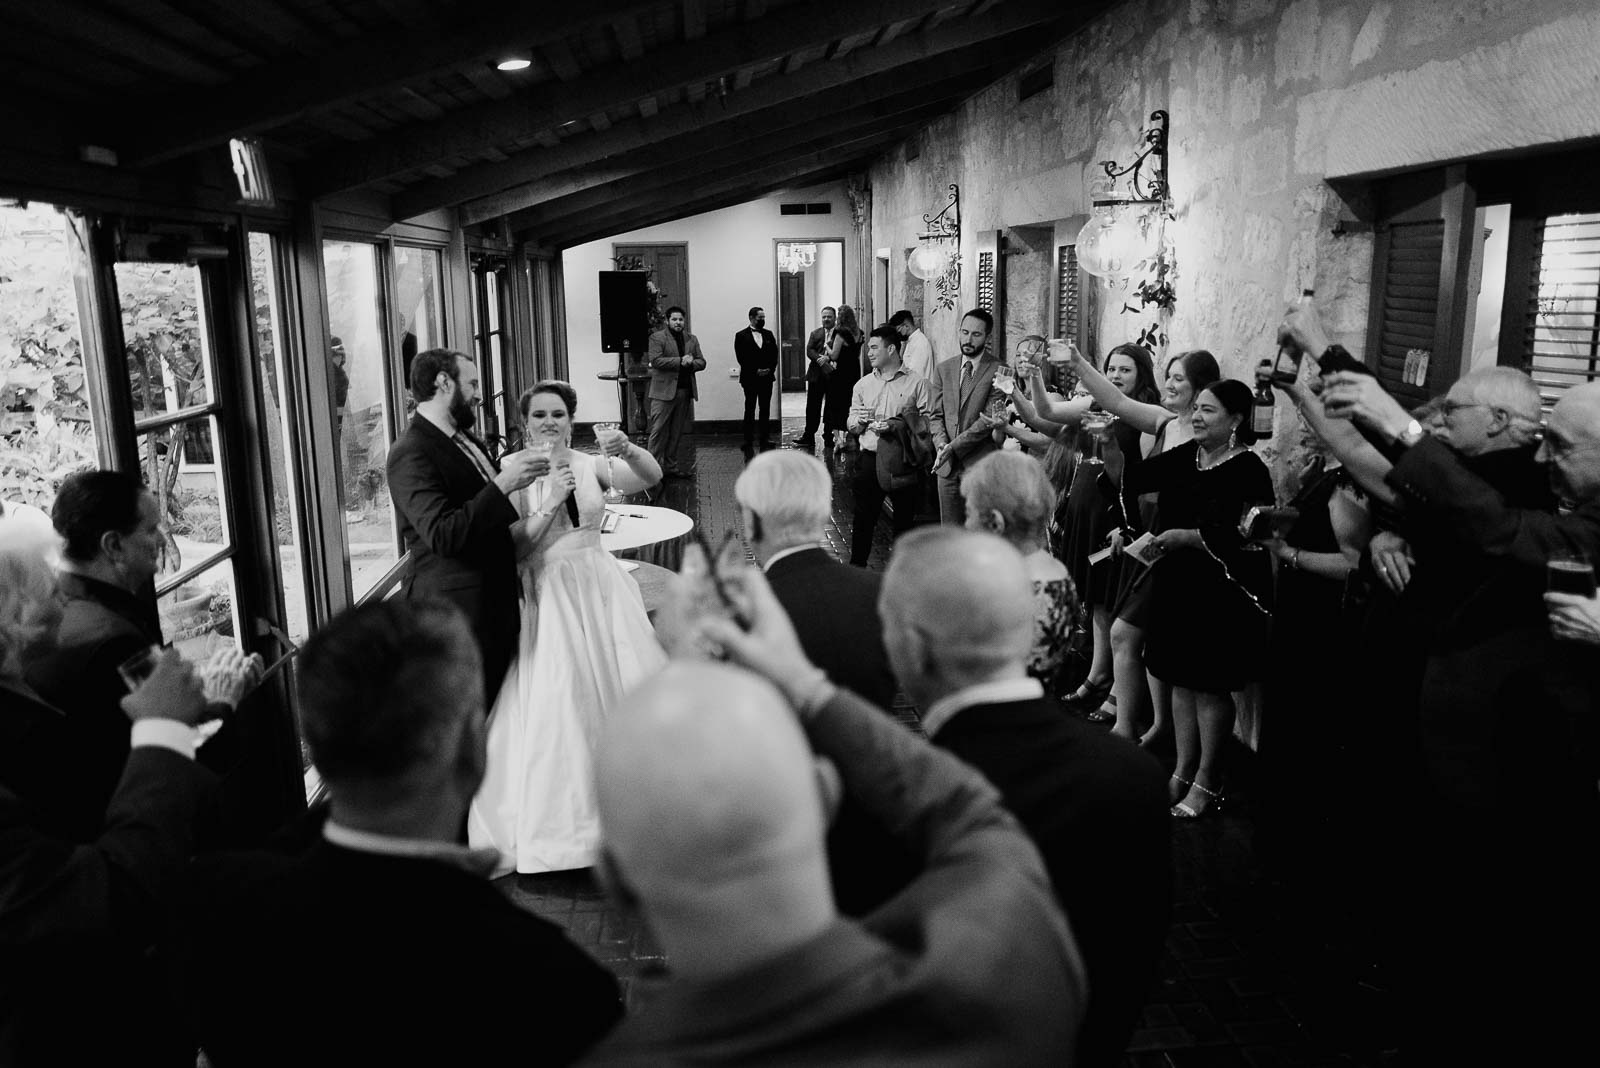 039 Club Giraud Wedding ceremony reception Leica photographer Philip Thomas Photography